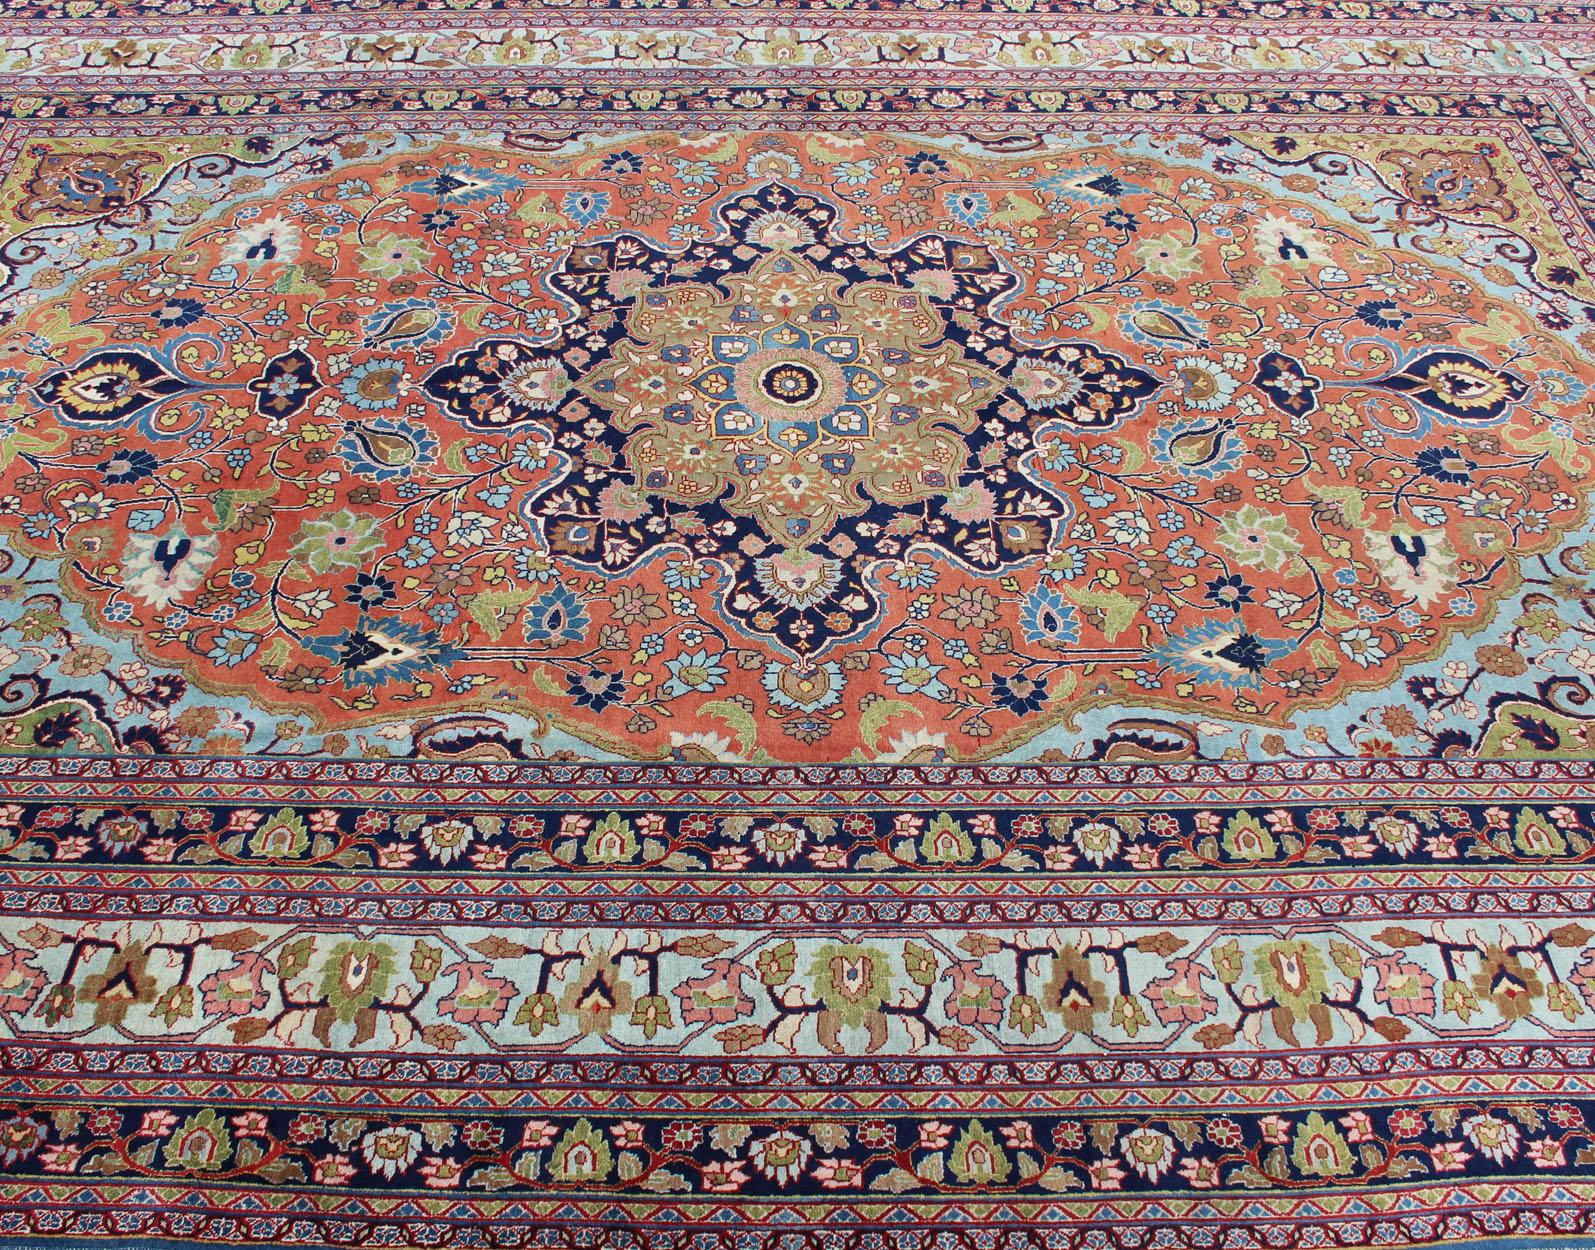 Antique Fine Persian Classic Design Tabriz Rug in Orange, Blue & Multi Colors For Sale 11